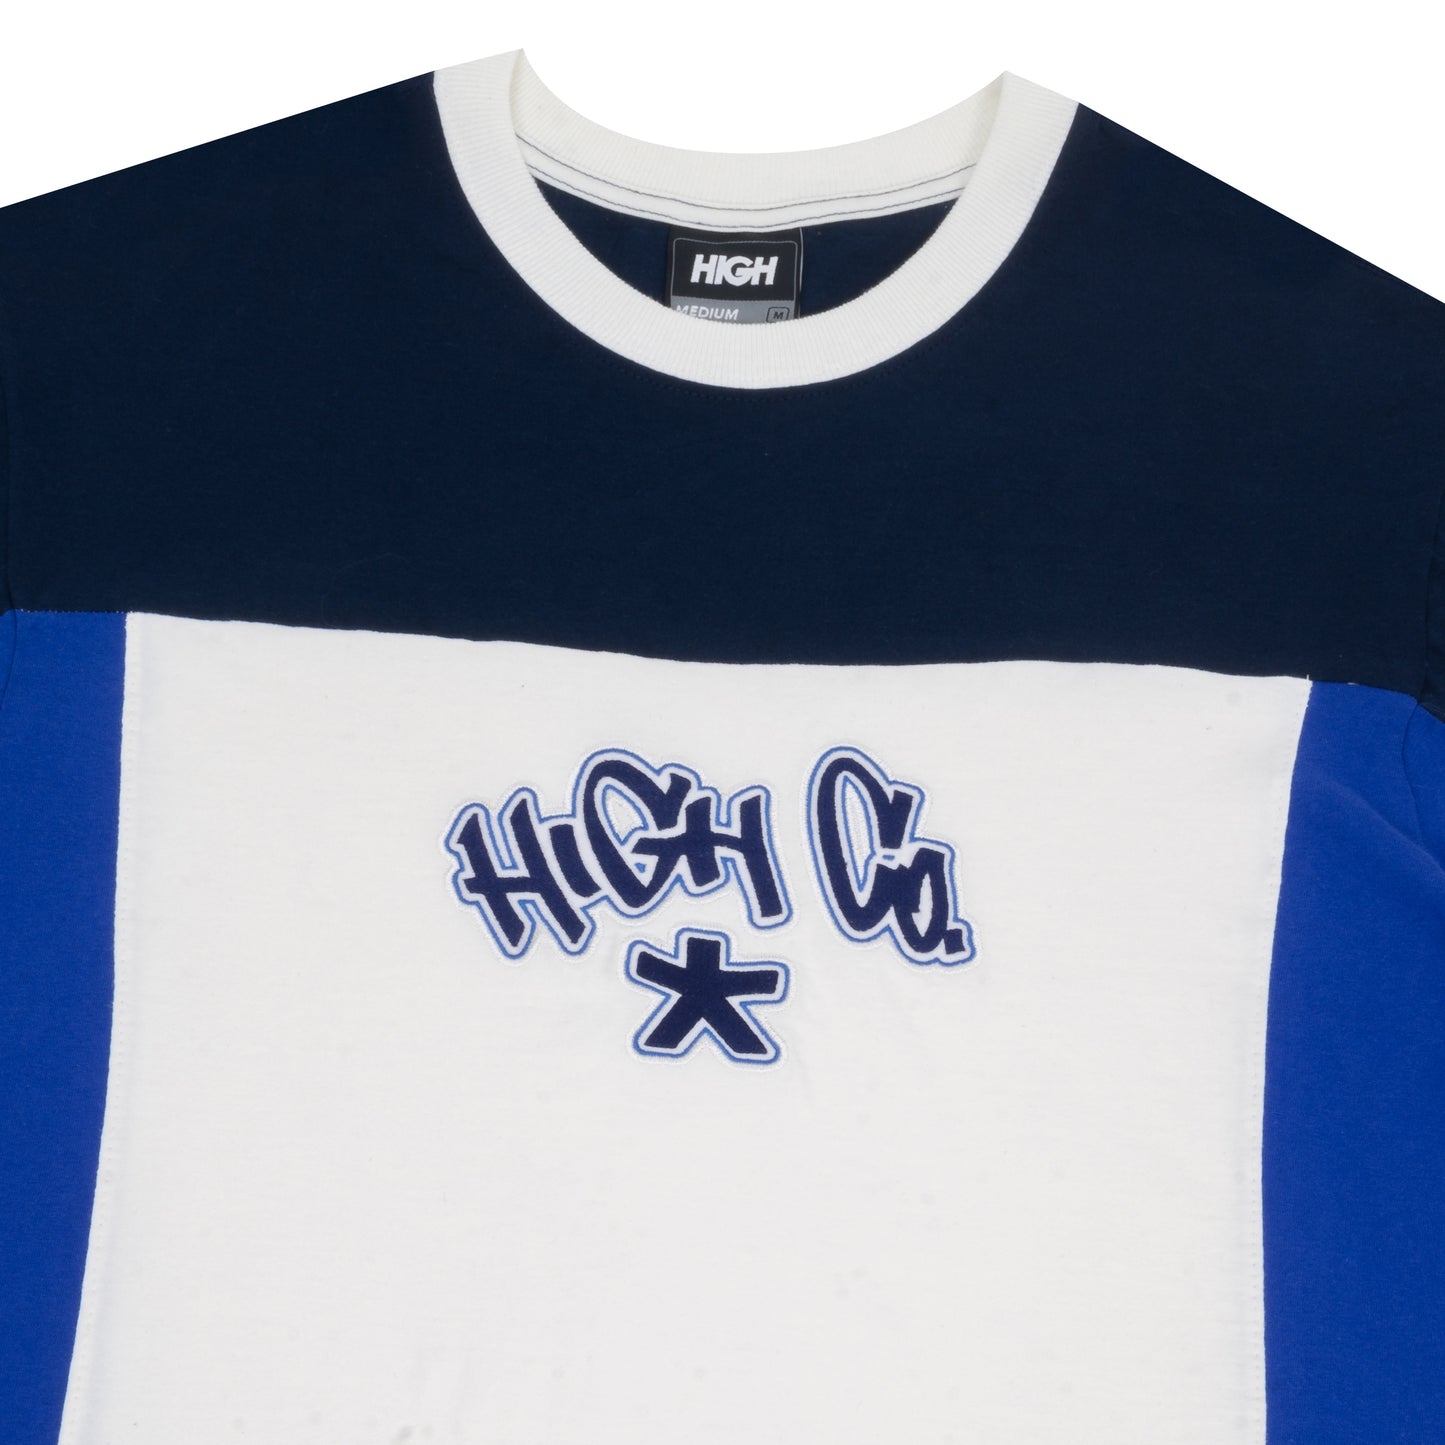 HIGH - Camiseta Solid Navy